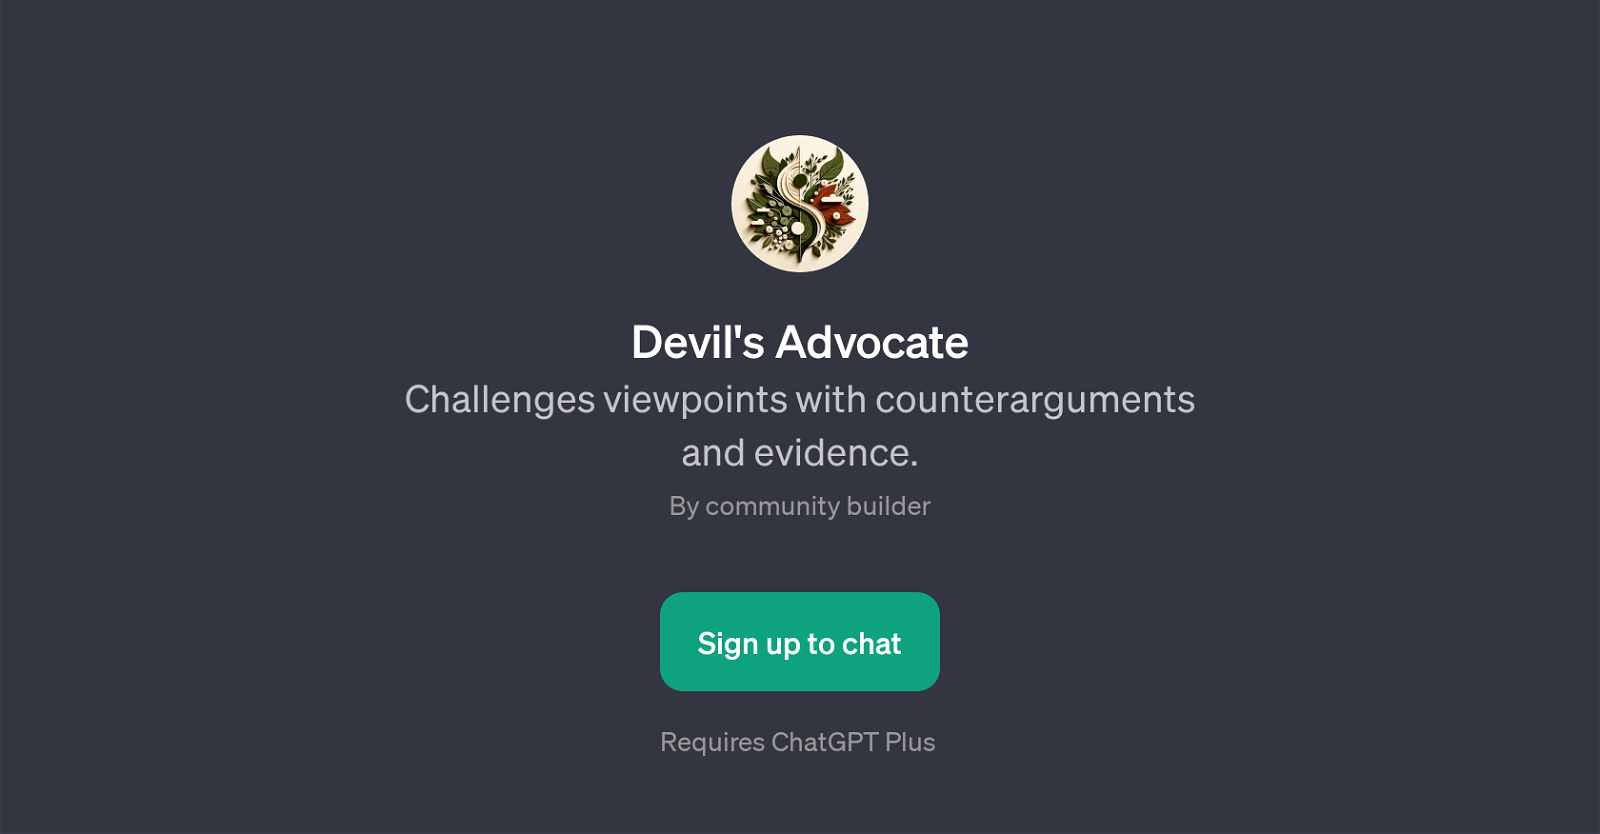 Devil's Advocate website